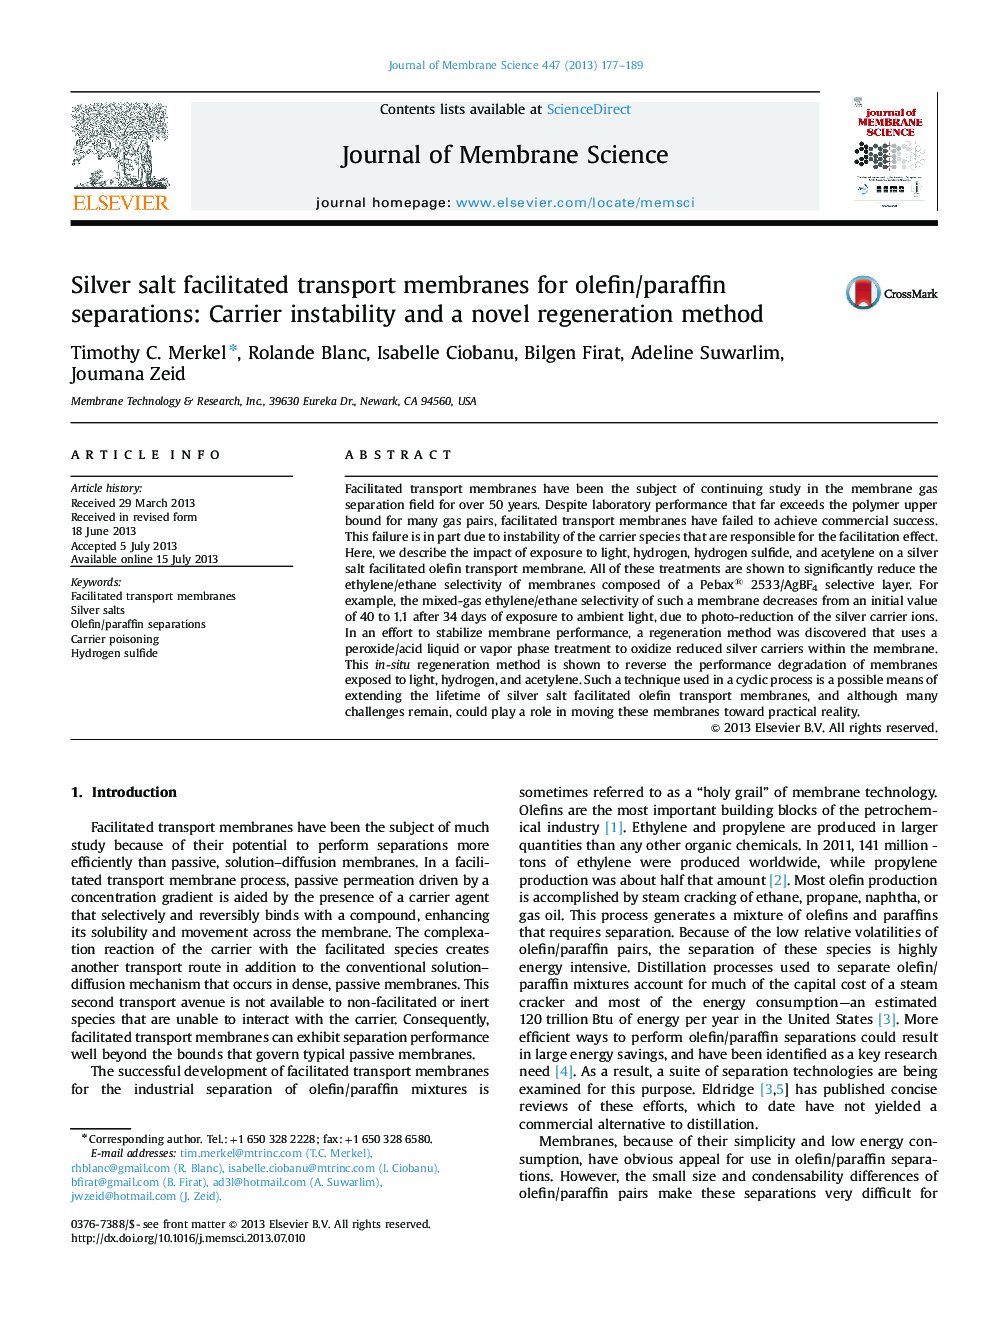 Silver salt facilitated transport membranes for olefin/paraffin separations: Carrier instability and a novel regeneration method